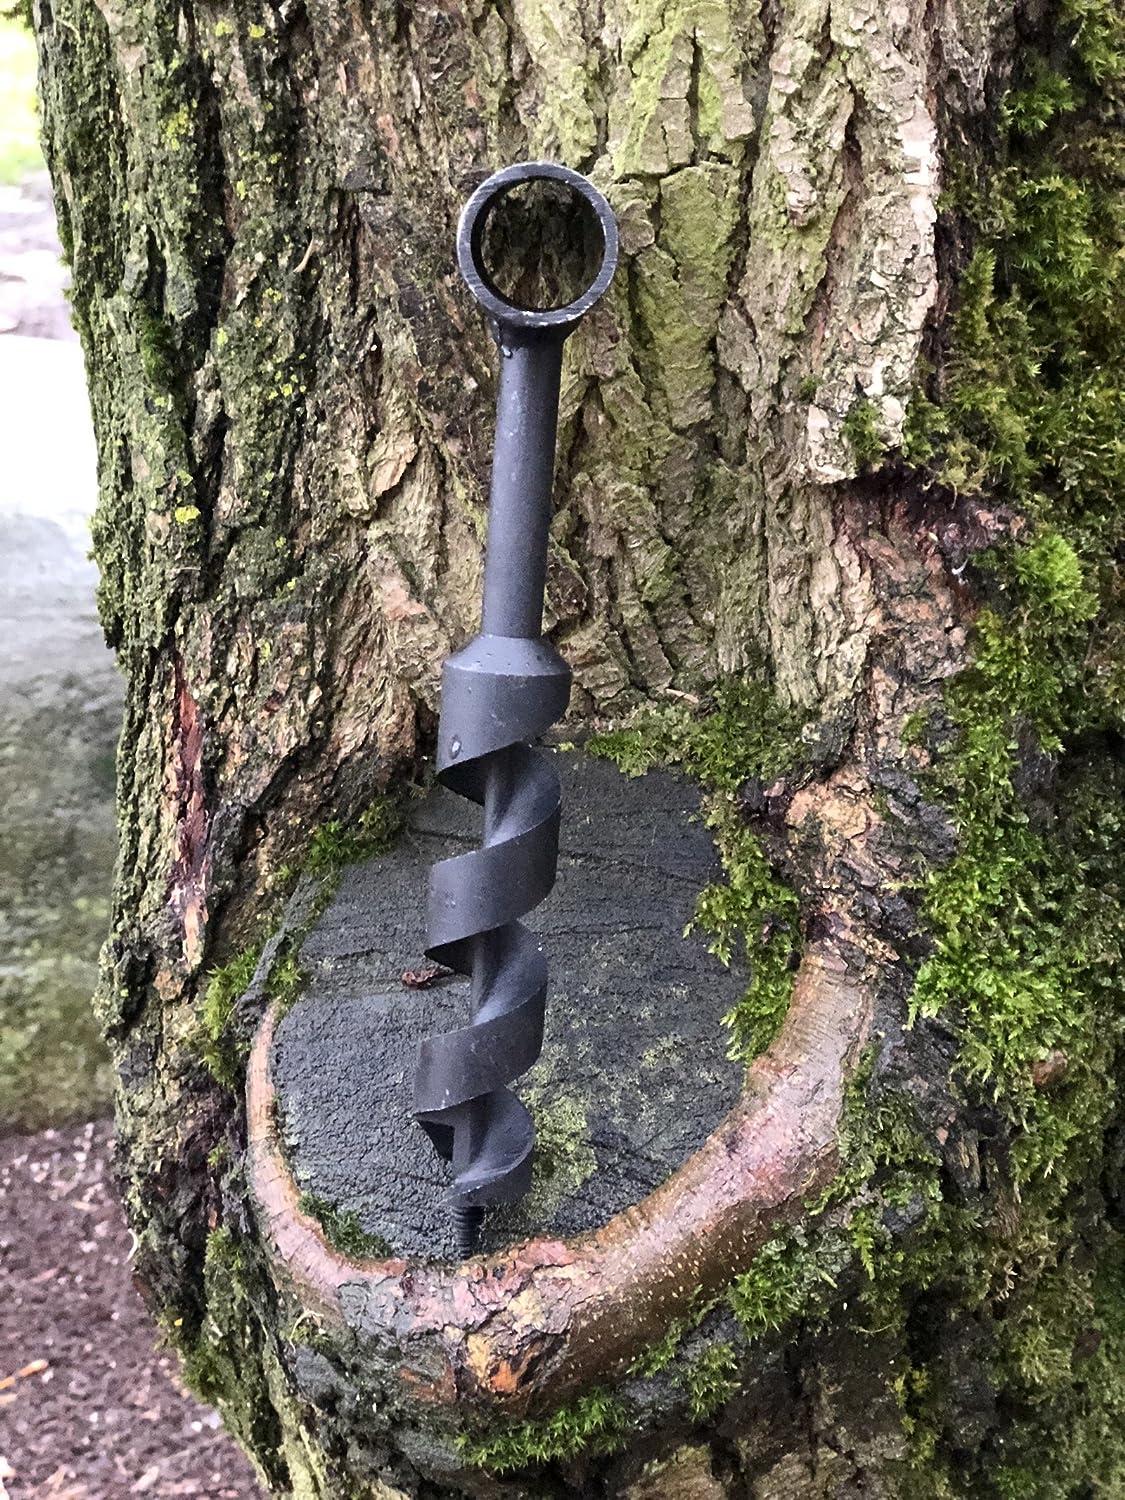 Scotch Eyed Auger Extra Long, Bushcraft Tools, Hiking Gear, Wood